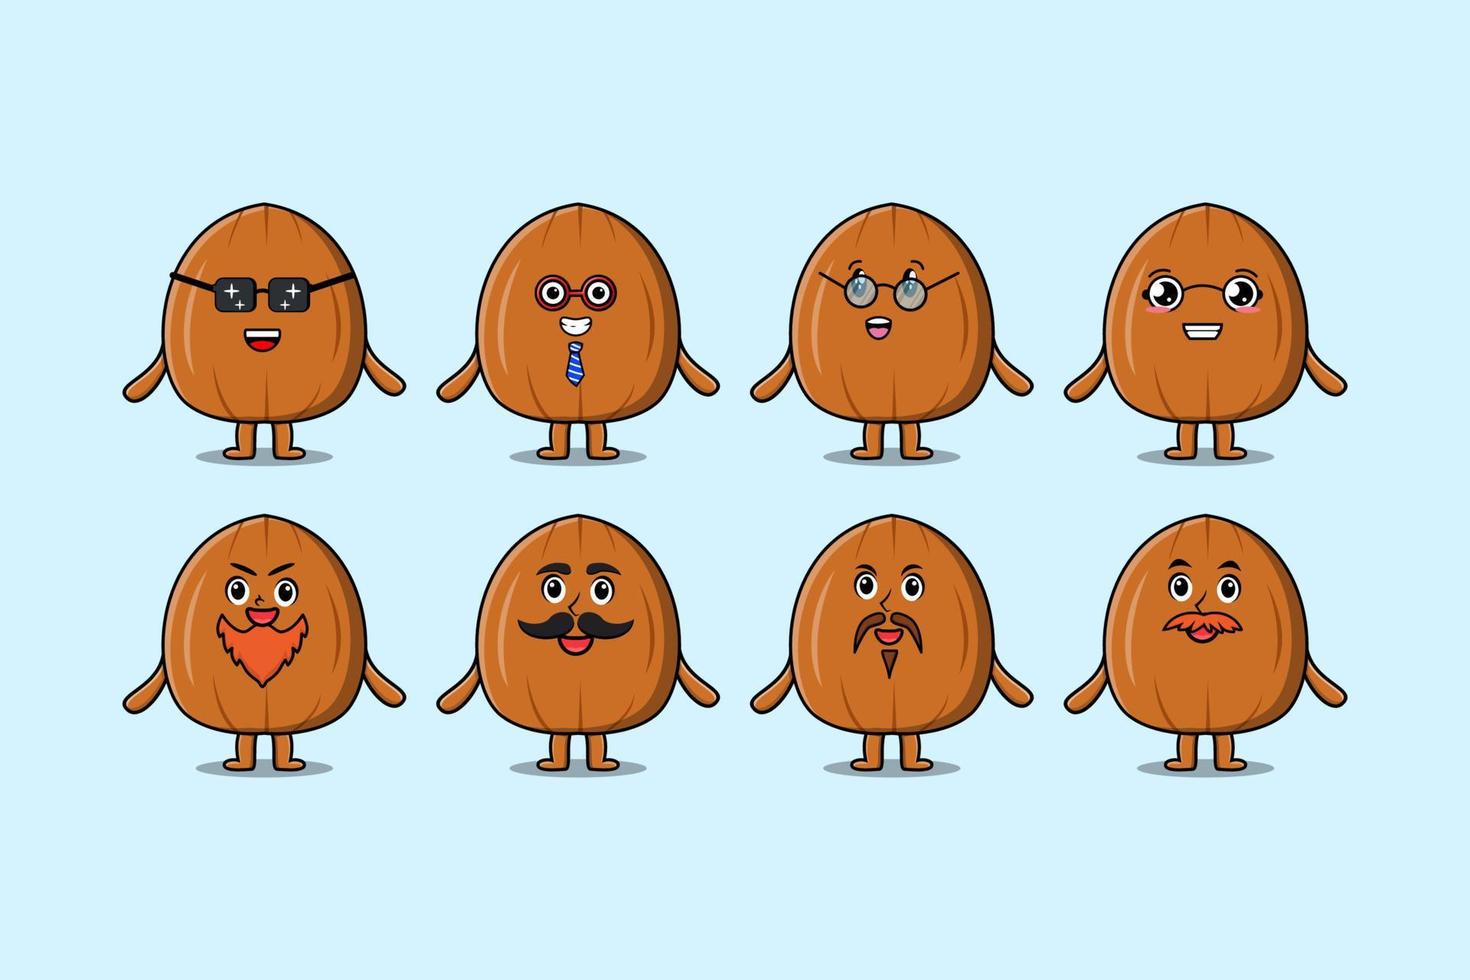 Set kawaii Almond nut cartoon character expression vector